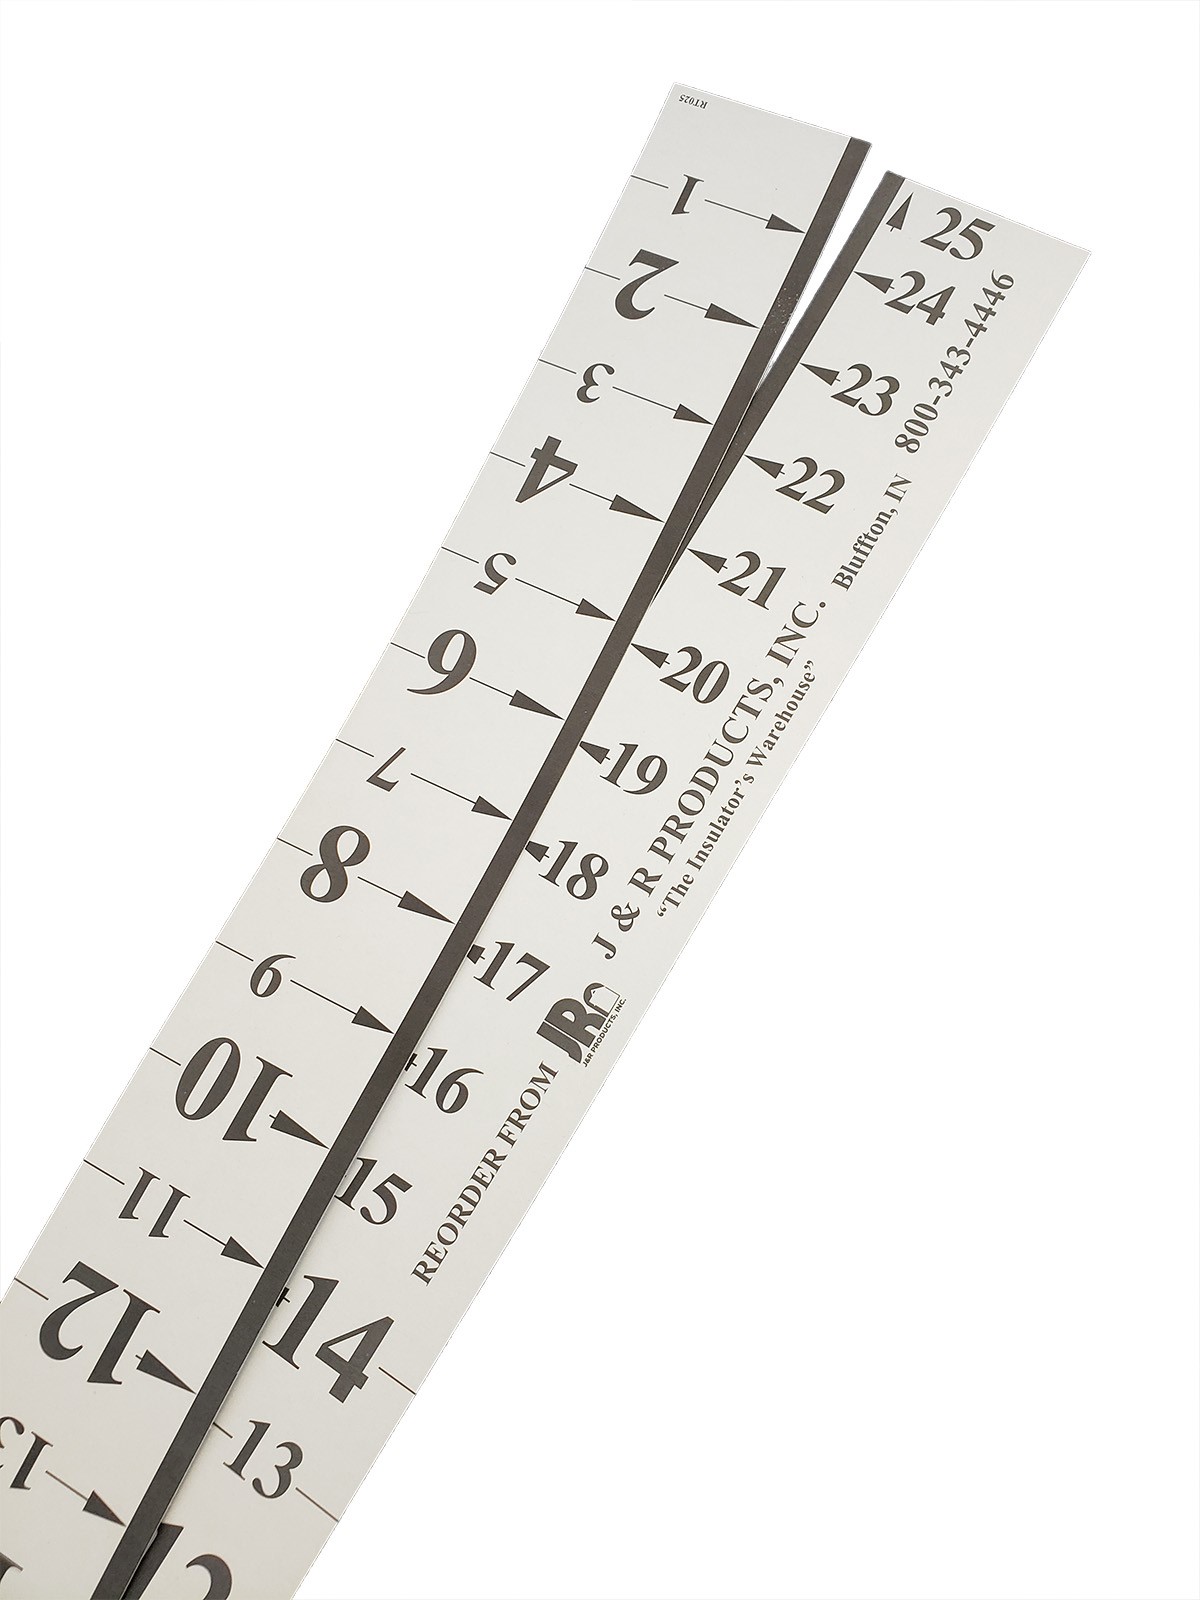 25 R-Sticks - Attic Measuring Rulers - Pack of 100